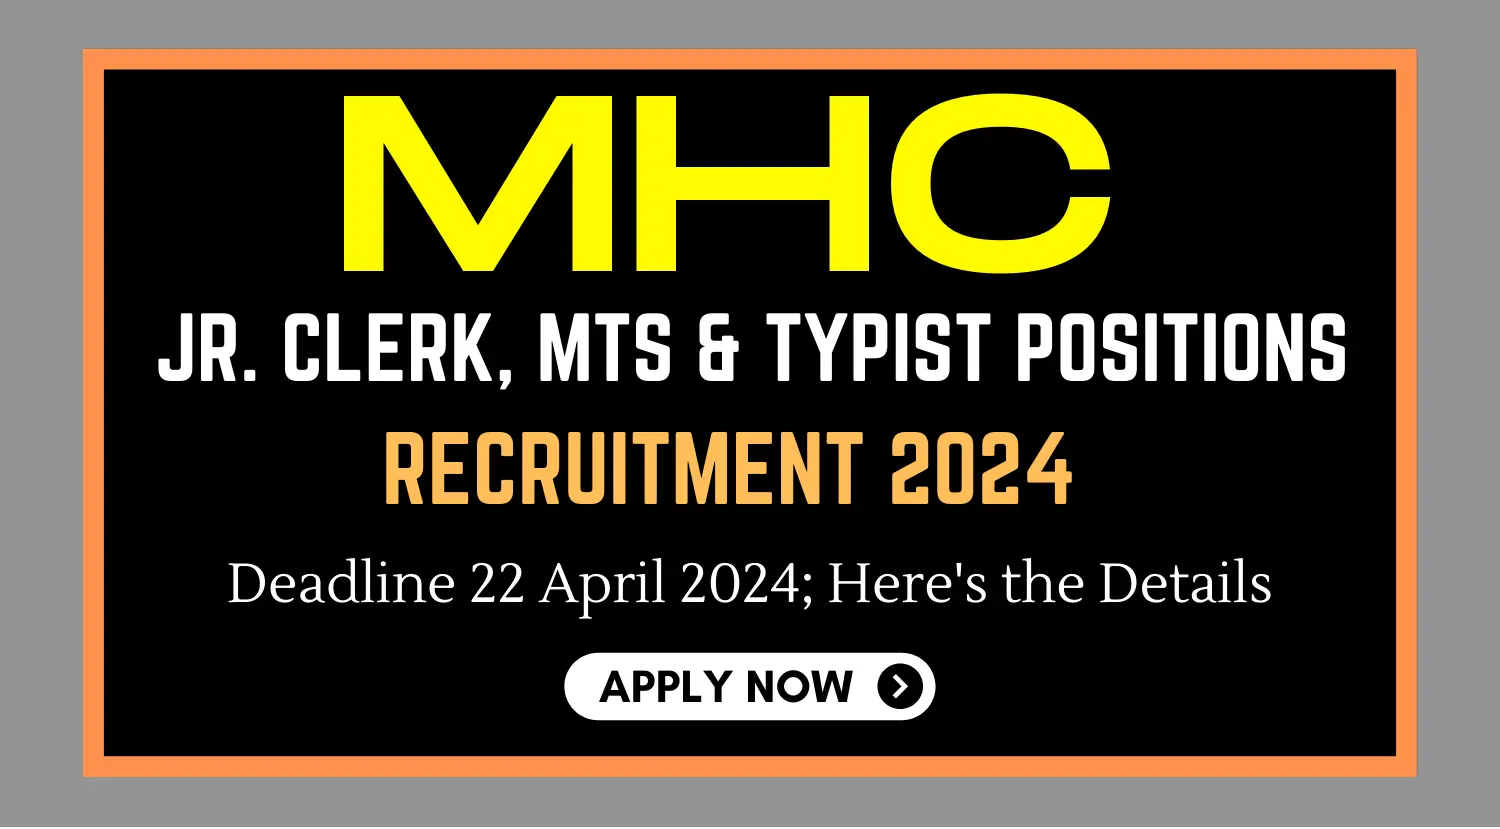 MHC 74 Vacancies for Jr Clerk MTS Typist Positions - Deadline 22 April 2024 Heres the Details